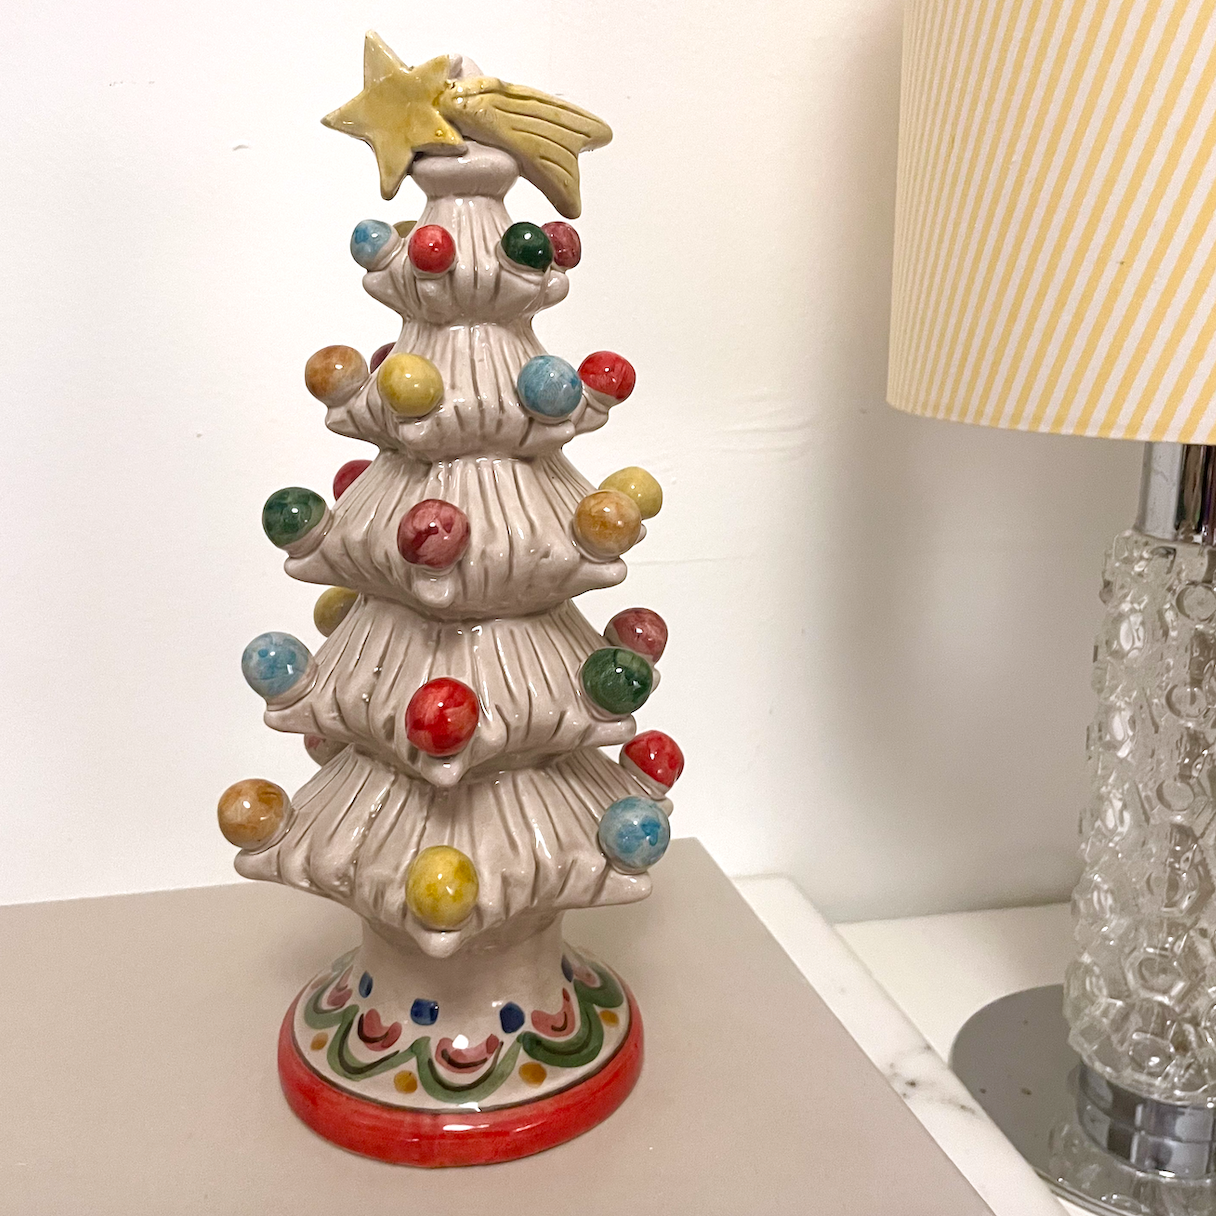 Handmade Sicilian Christmas trees 〰️ no. 4